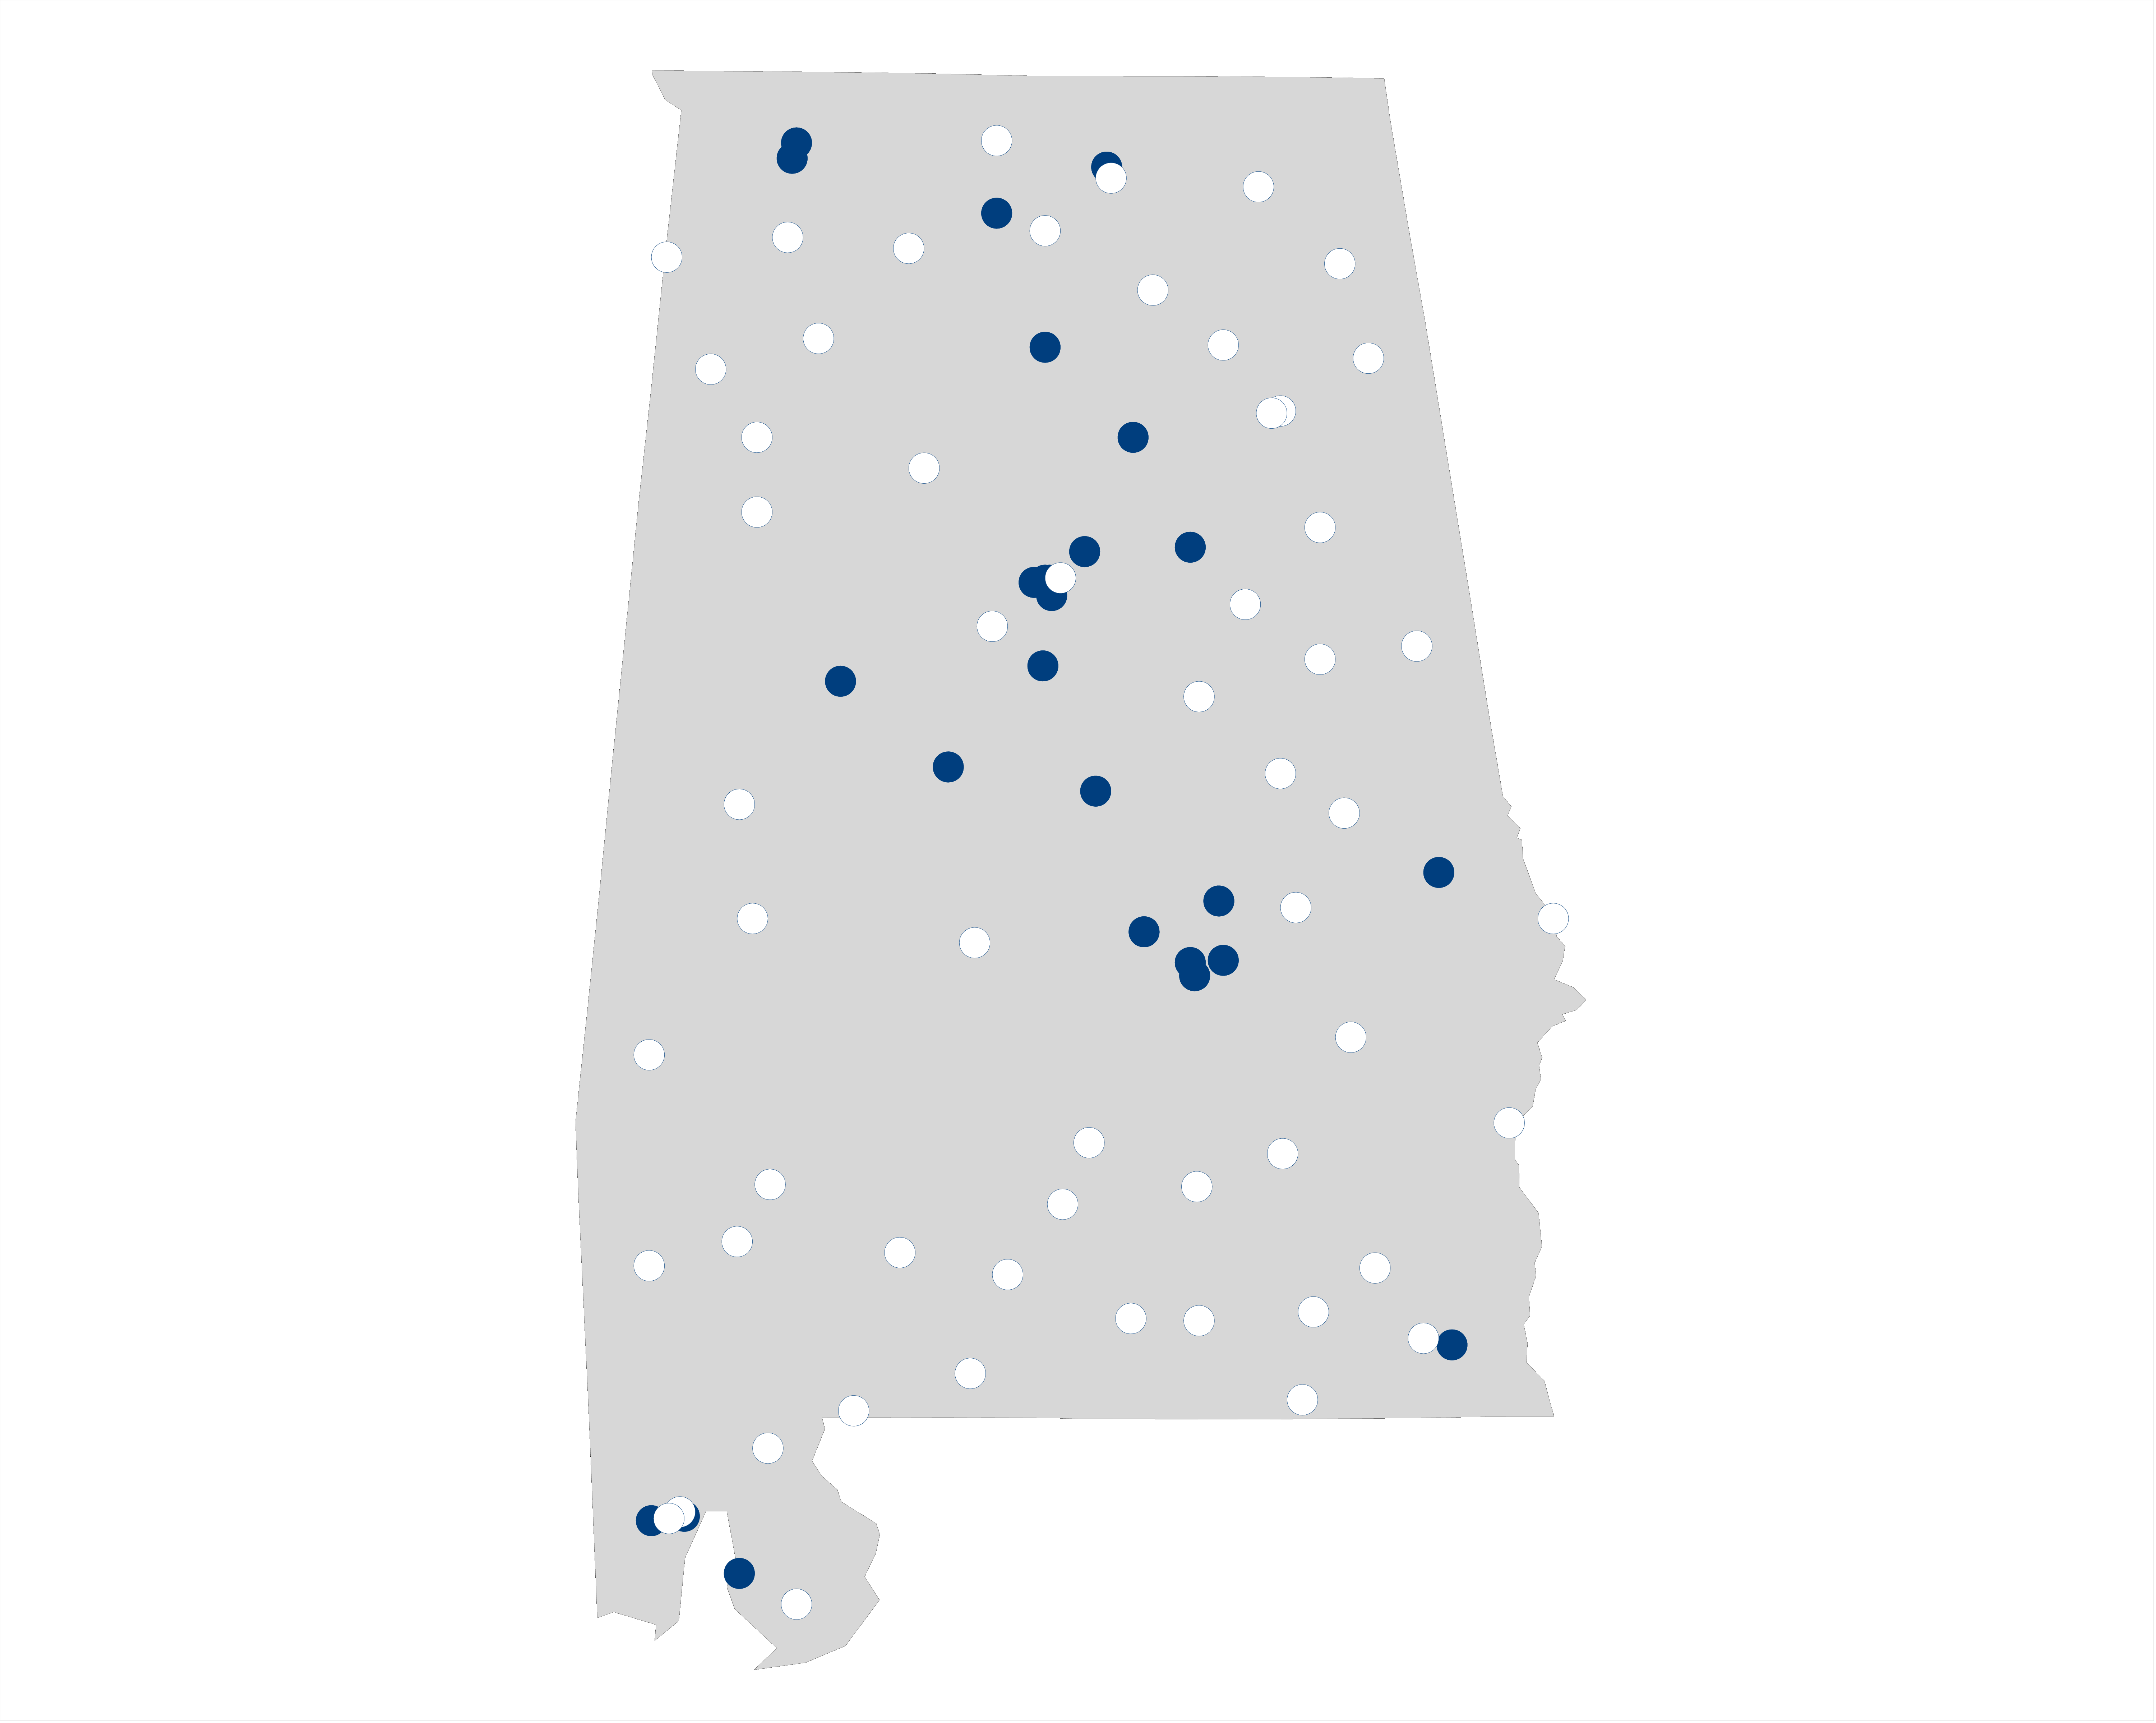 hospital palliative care map for Alabama